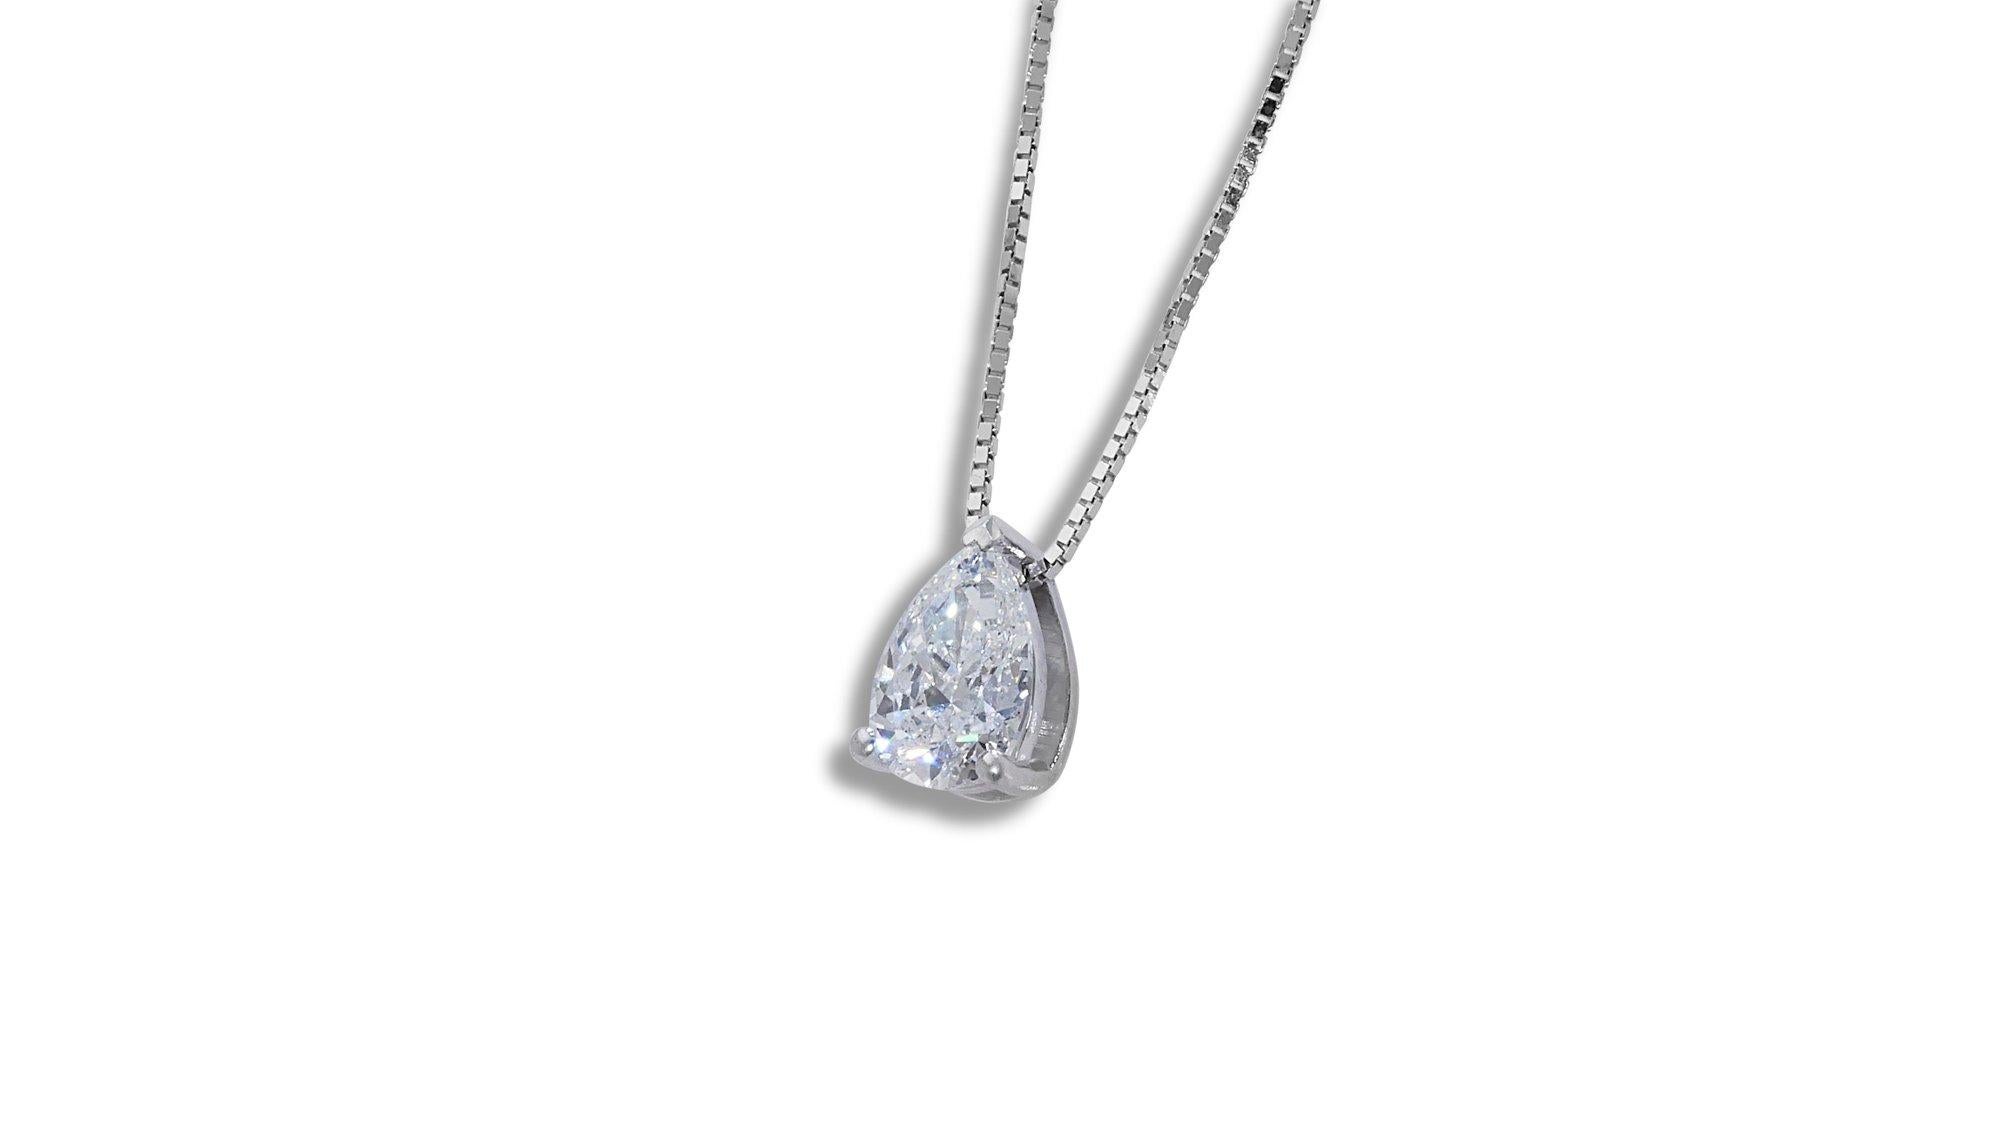 Women's Dazzling 18k White Gold Pendant Necklace with a 0.90 carat brilliant diamond For Sale